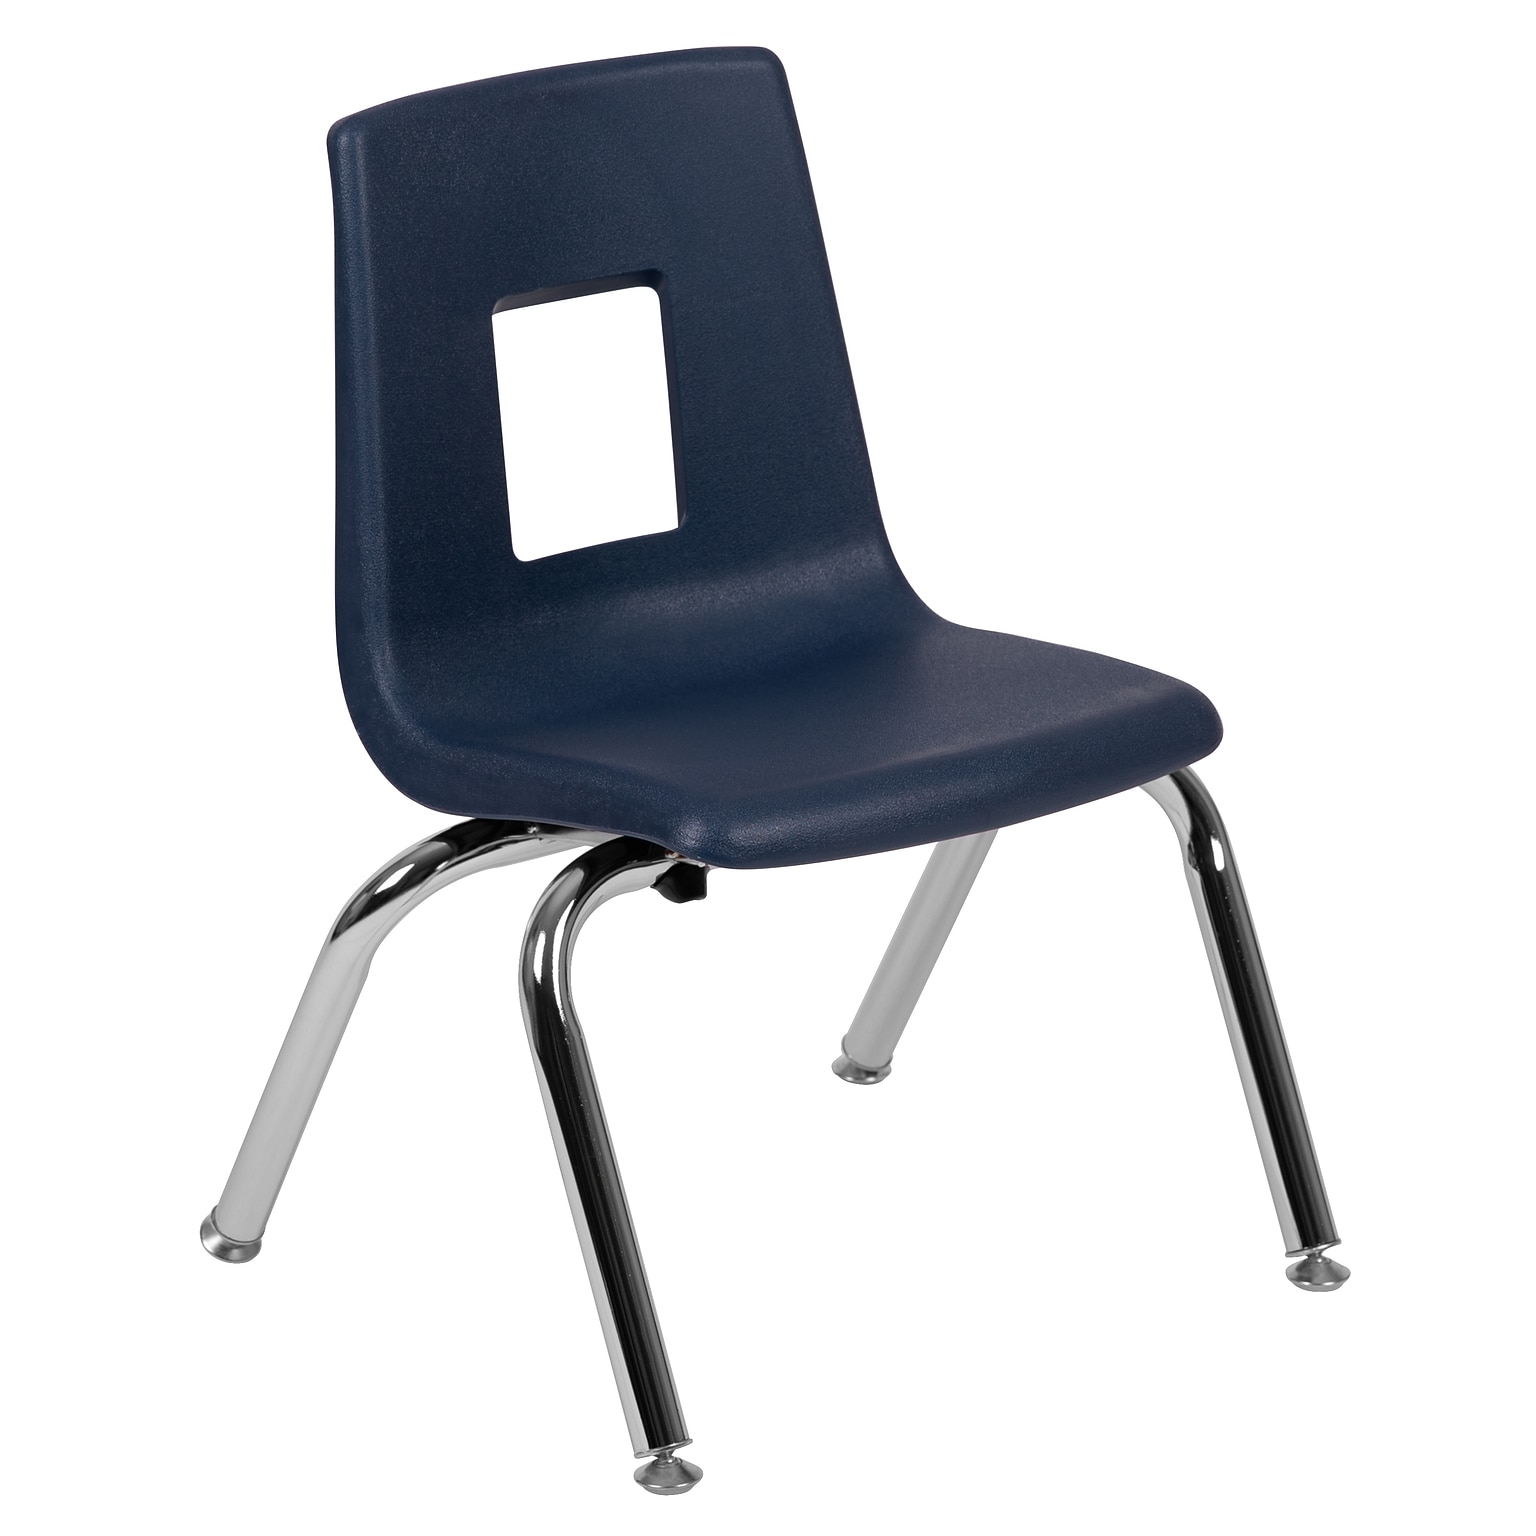 Flash Furniture Mickey Plastic Student Stack School Chair, Navy (ADVSSC12NAVY)